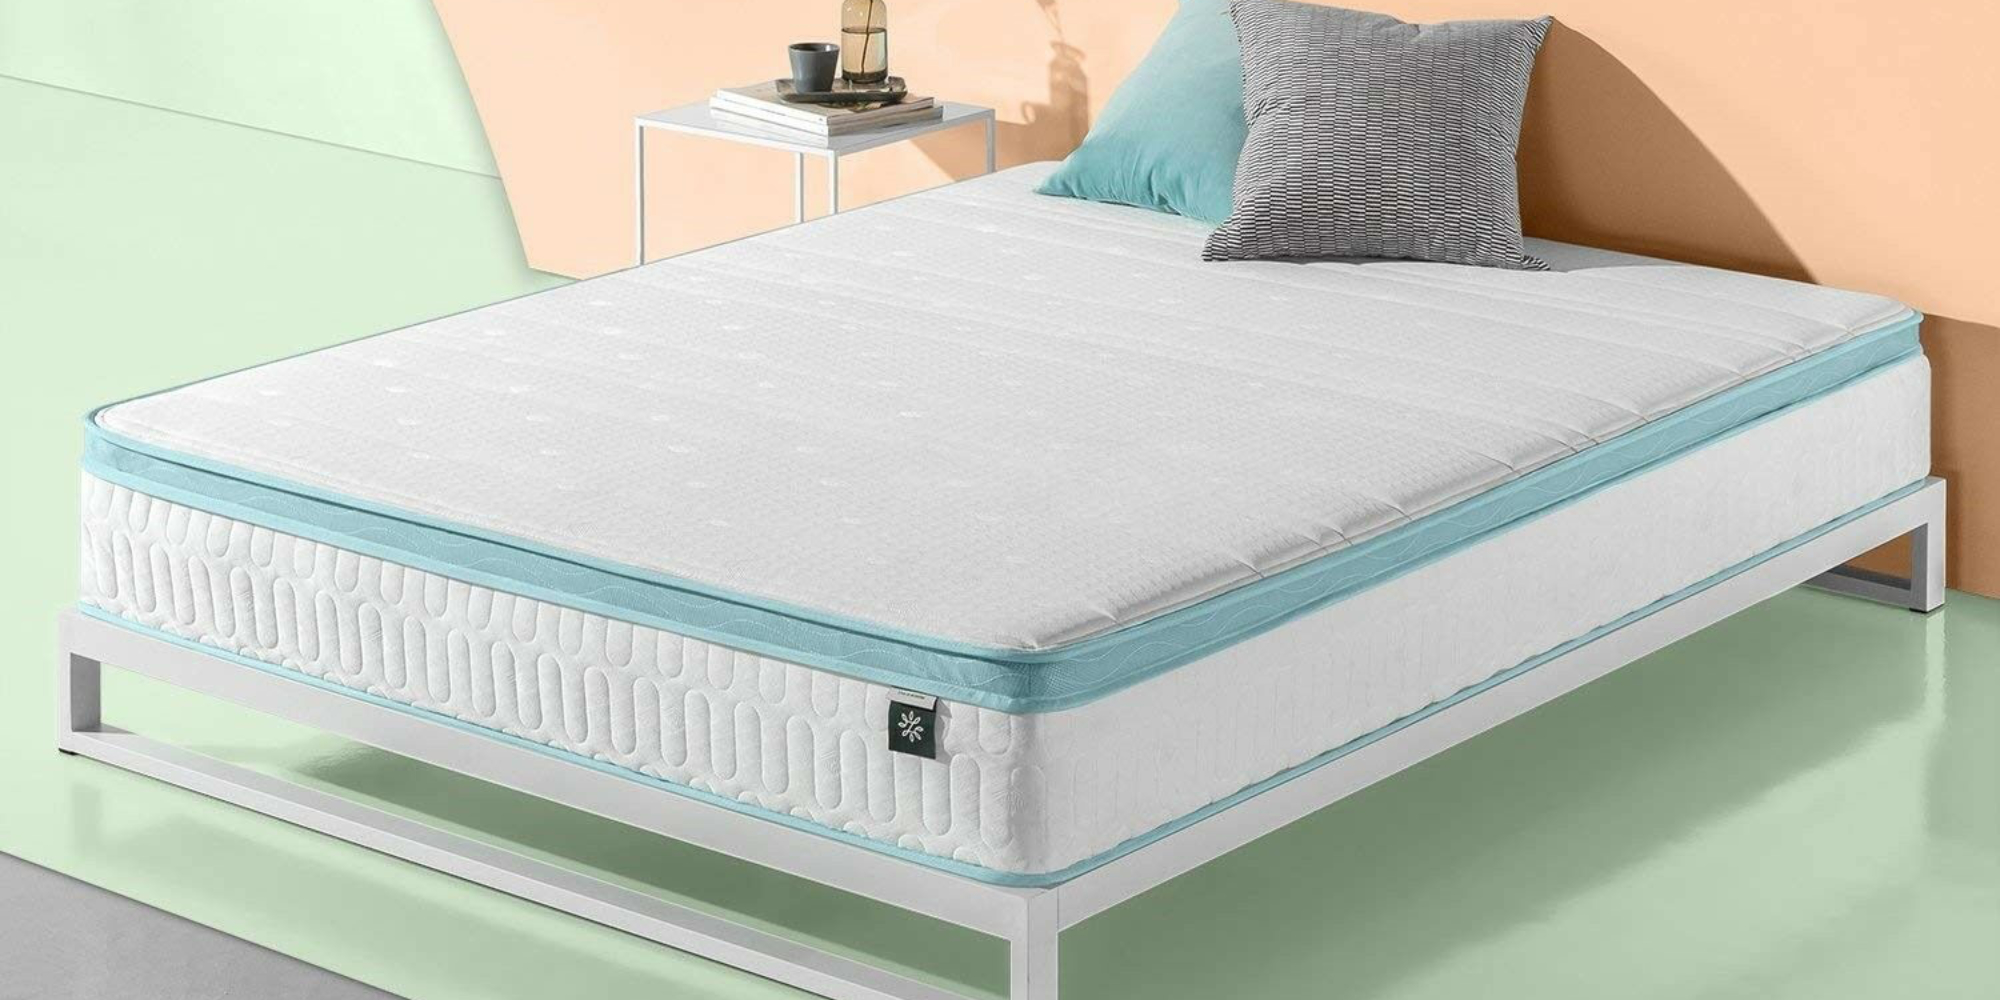 zinus 10 inch mattress review